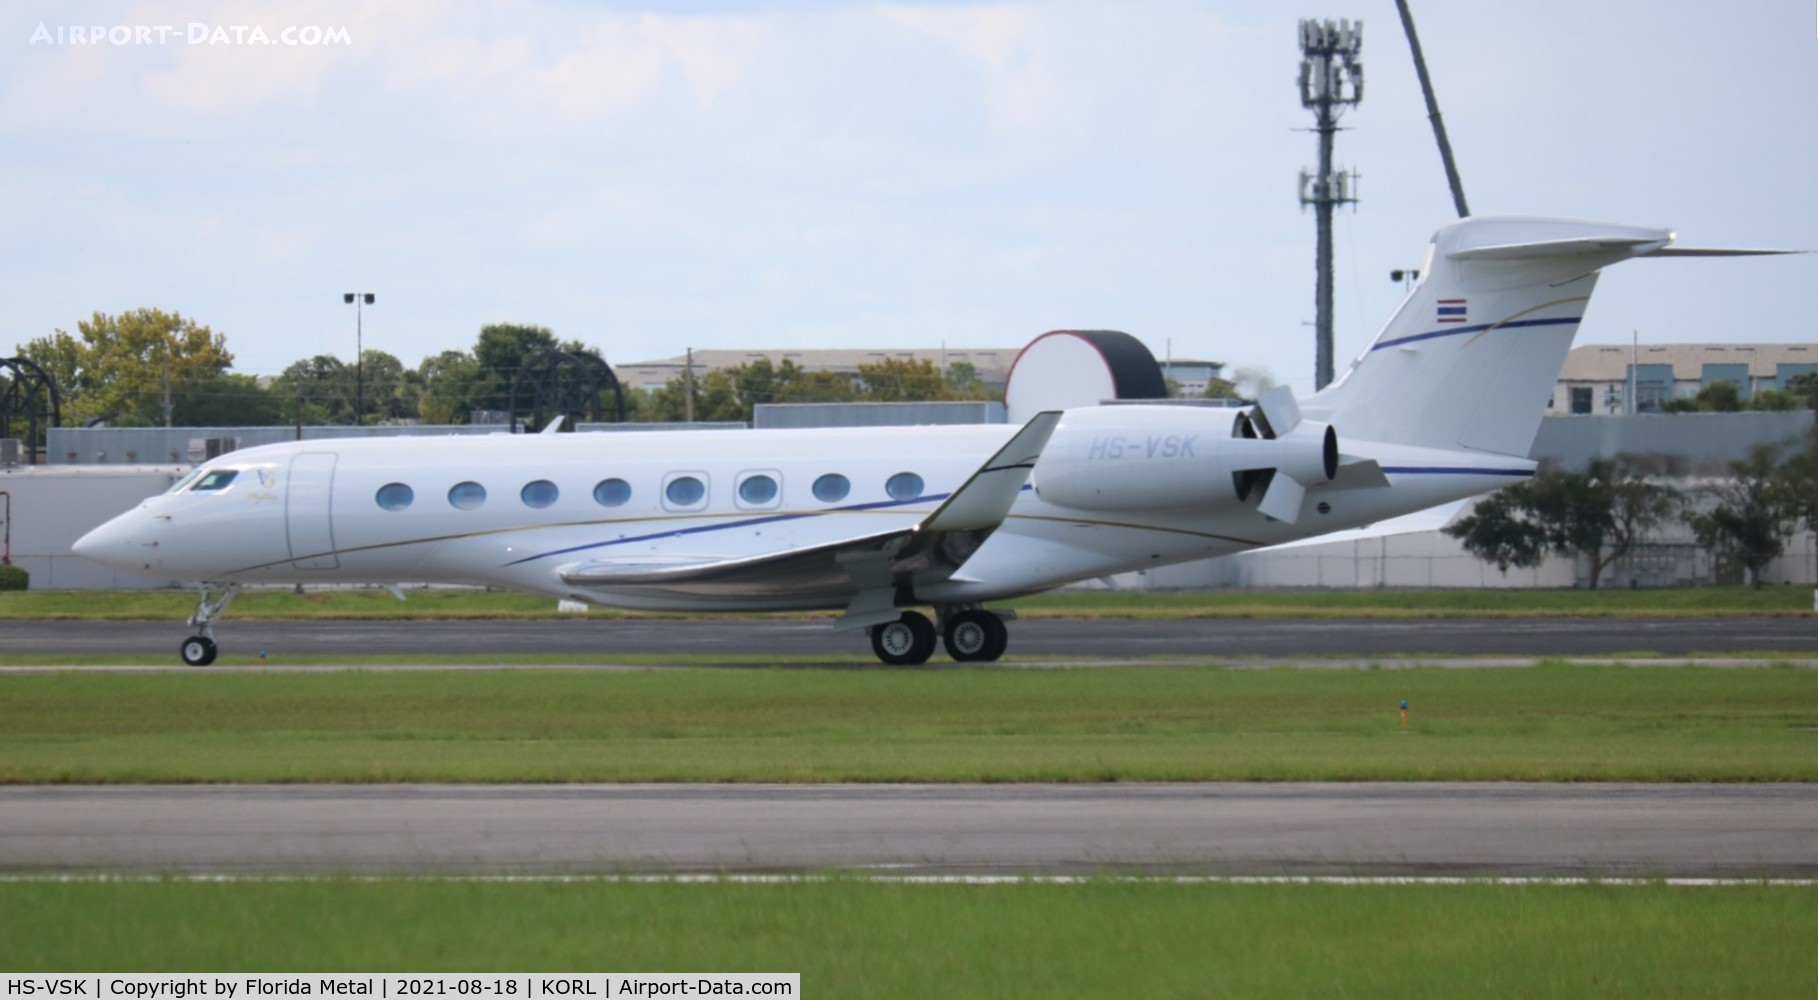 HS-VSK, 2013 Gulfstream Aerospace G650 (G-VI) C/N 6023, G650 zx